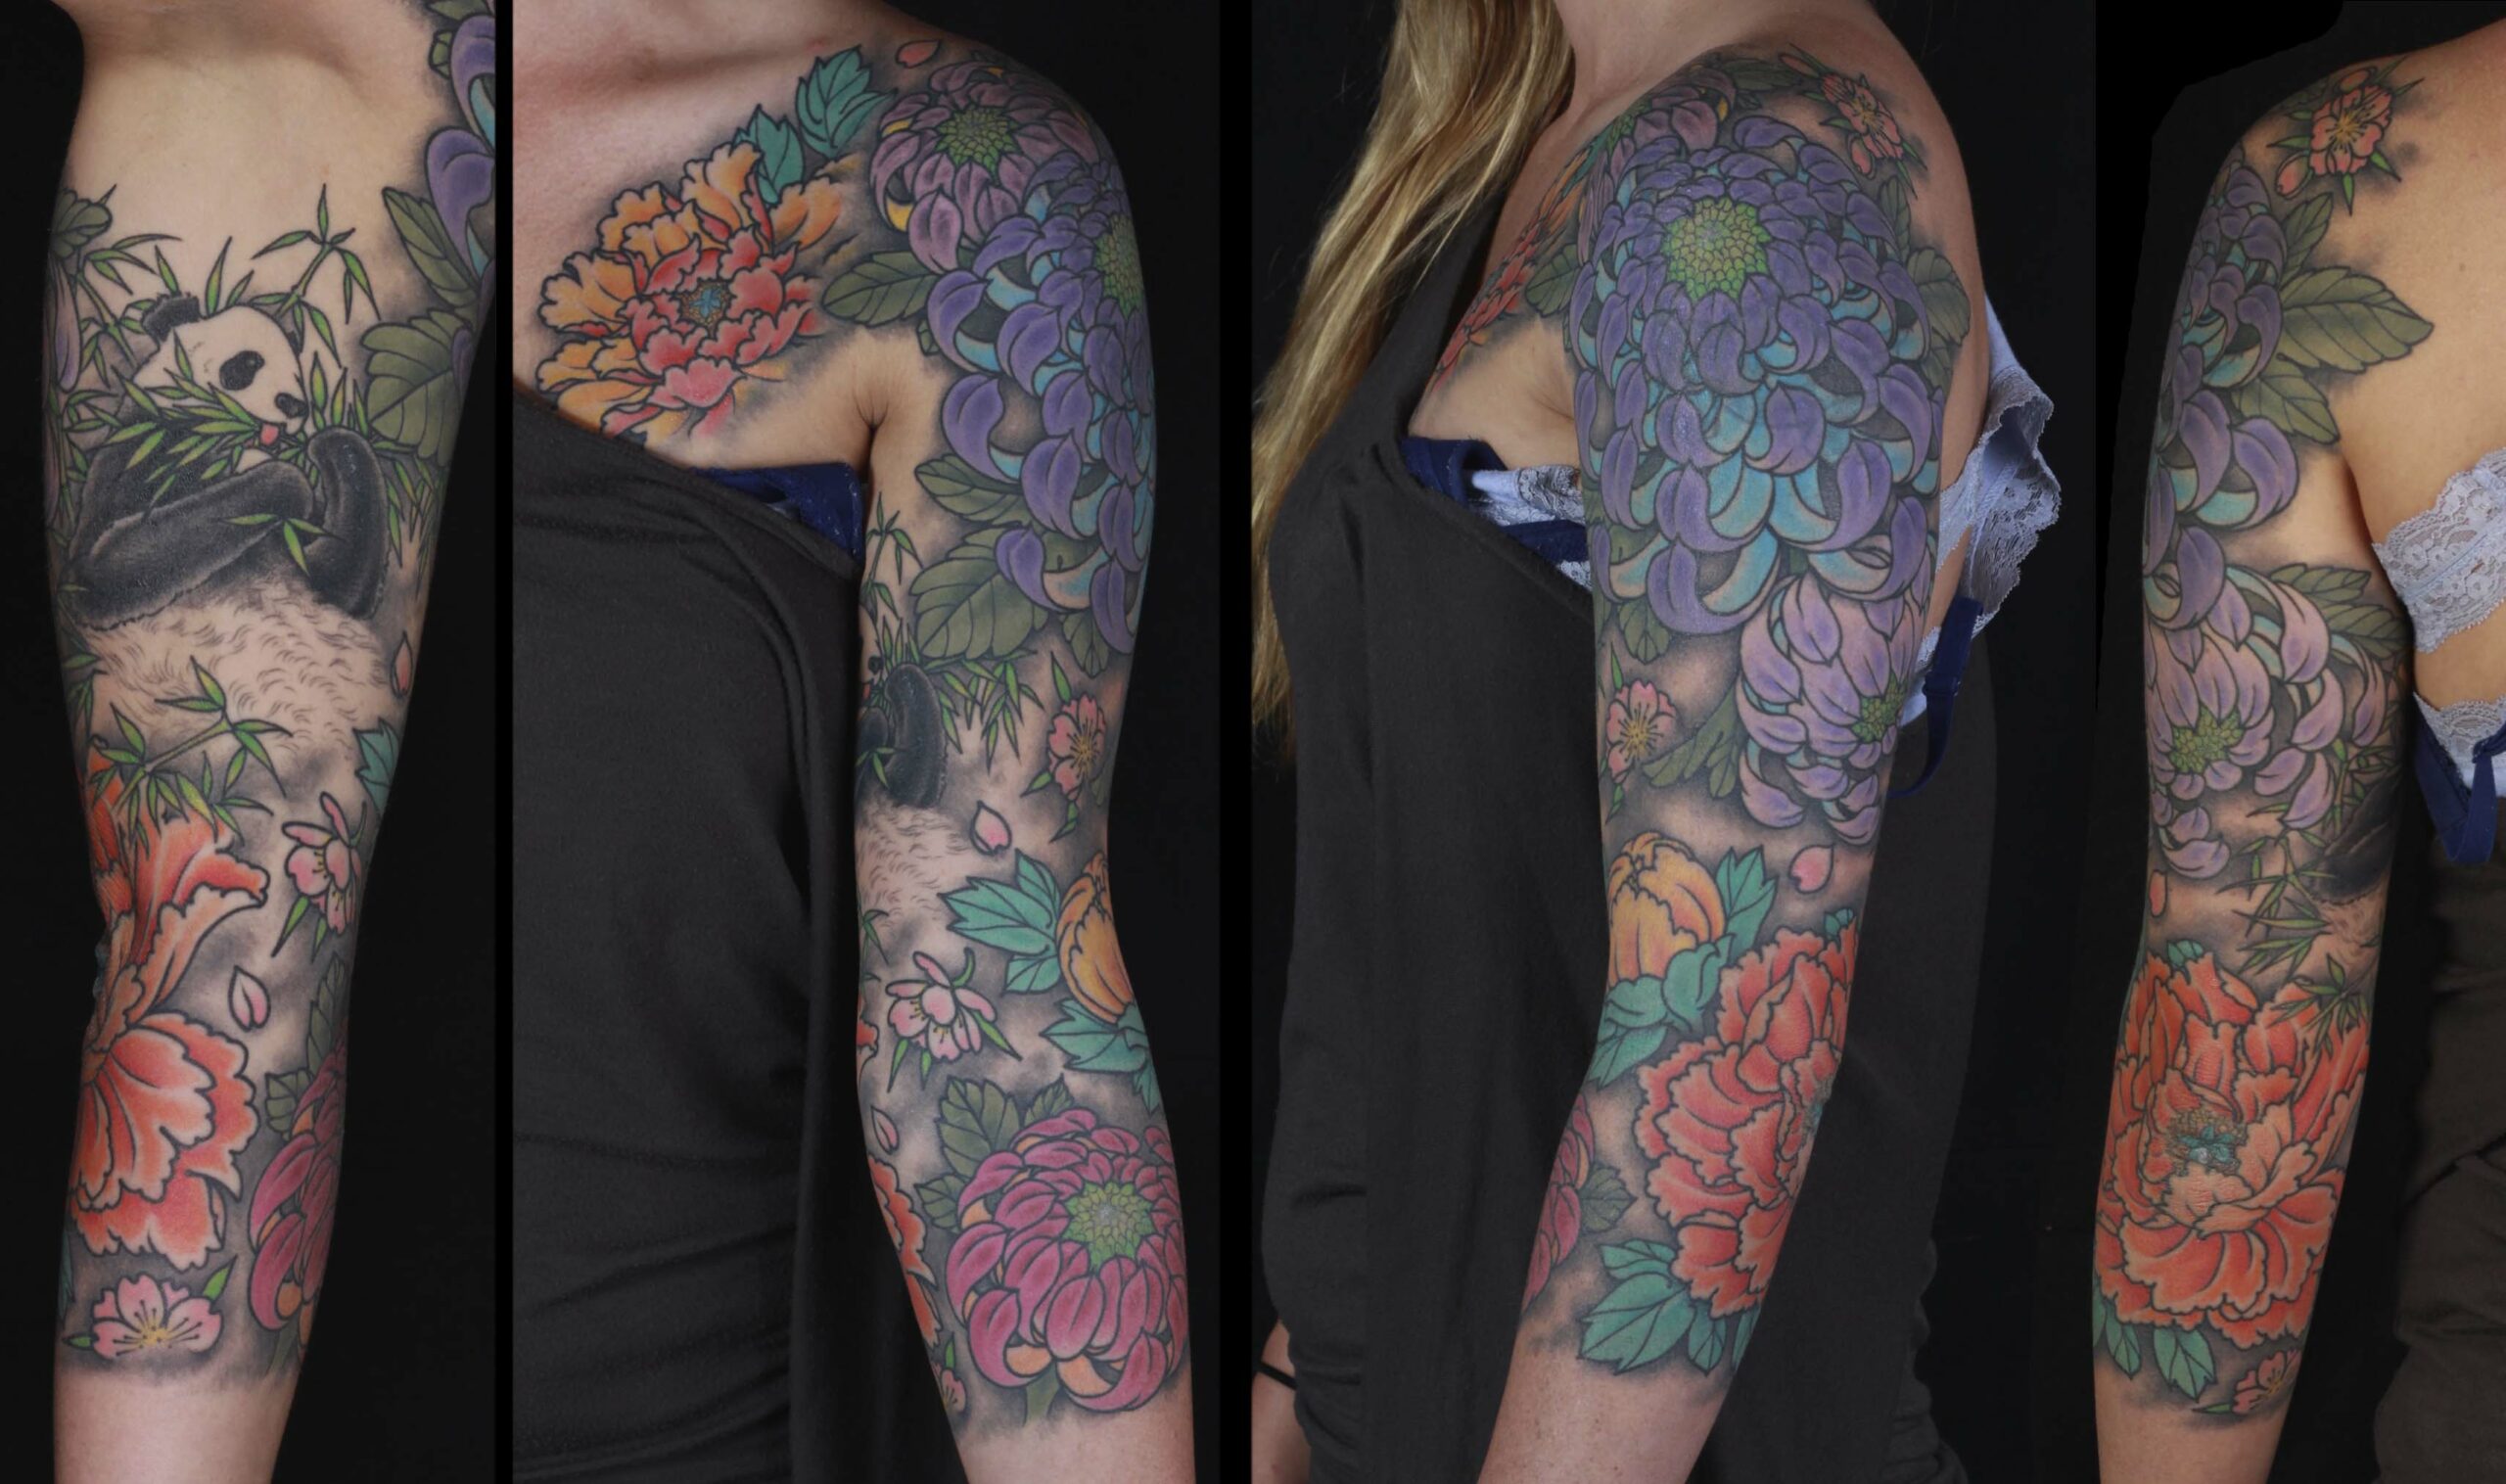 brian-thurow-dedication-tattoo-chrysanthemum-peonies-panda-sleeve-chest-arm